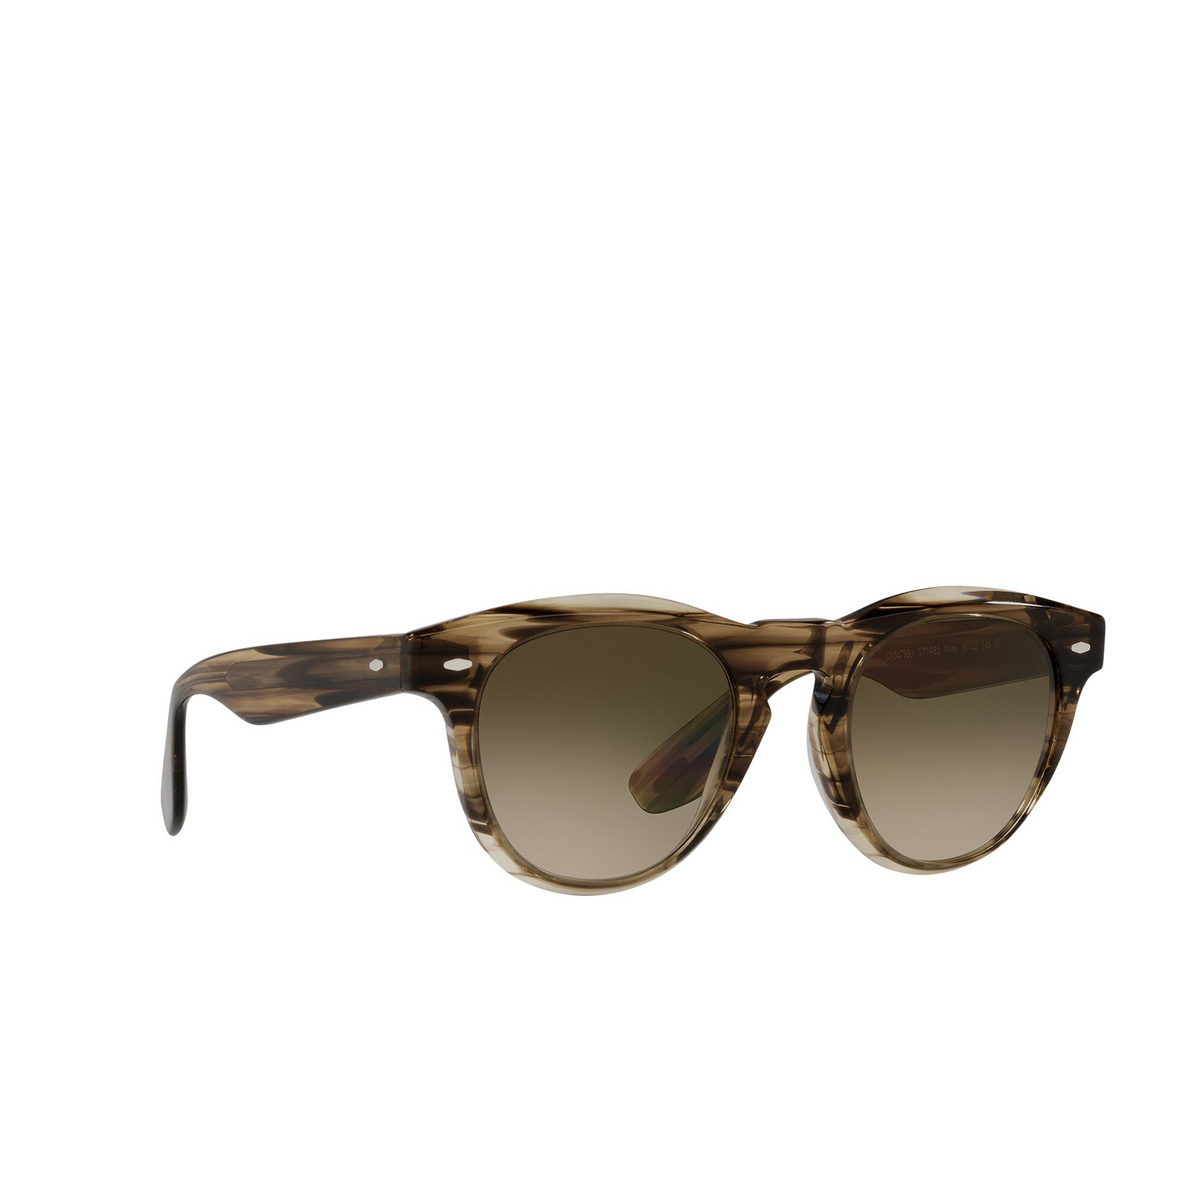 Oliver Peoples® Square Sunglasses: Nino OV5473SU color Olive Smoke 171985 - three-quarters view.